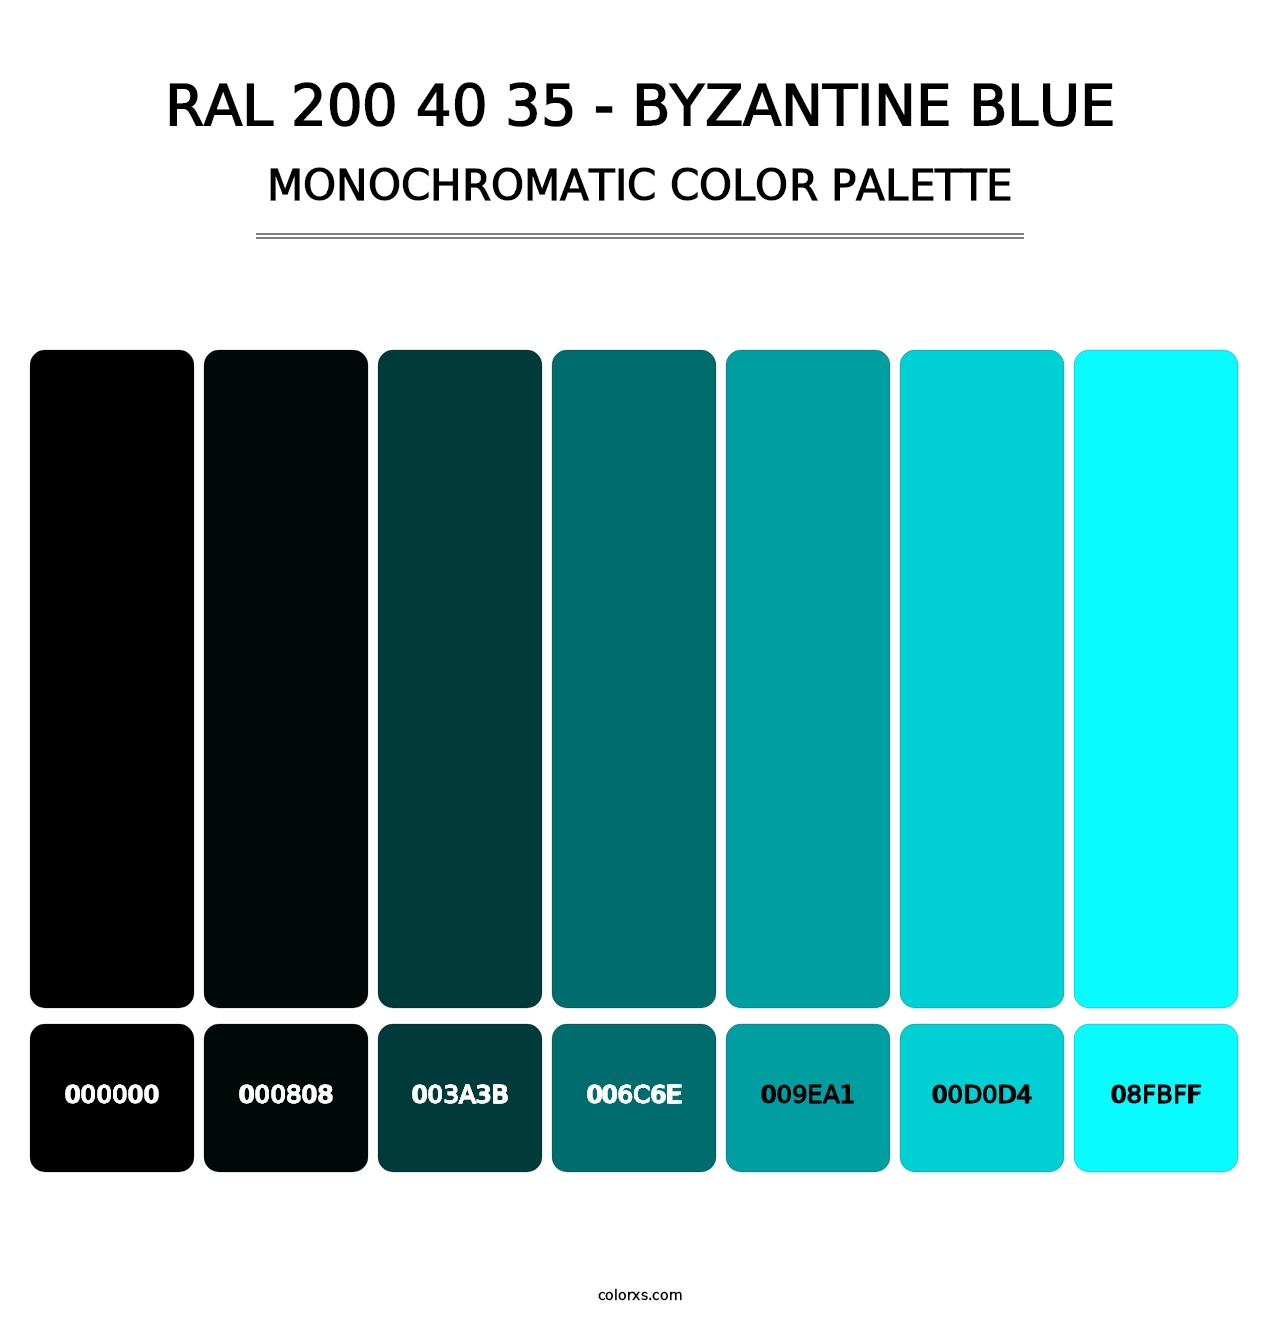 RAL 200 40 35 - Byzantine Blue - Monochromatic Color Palette